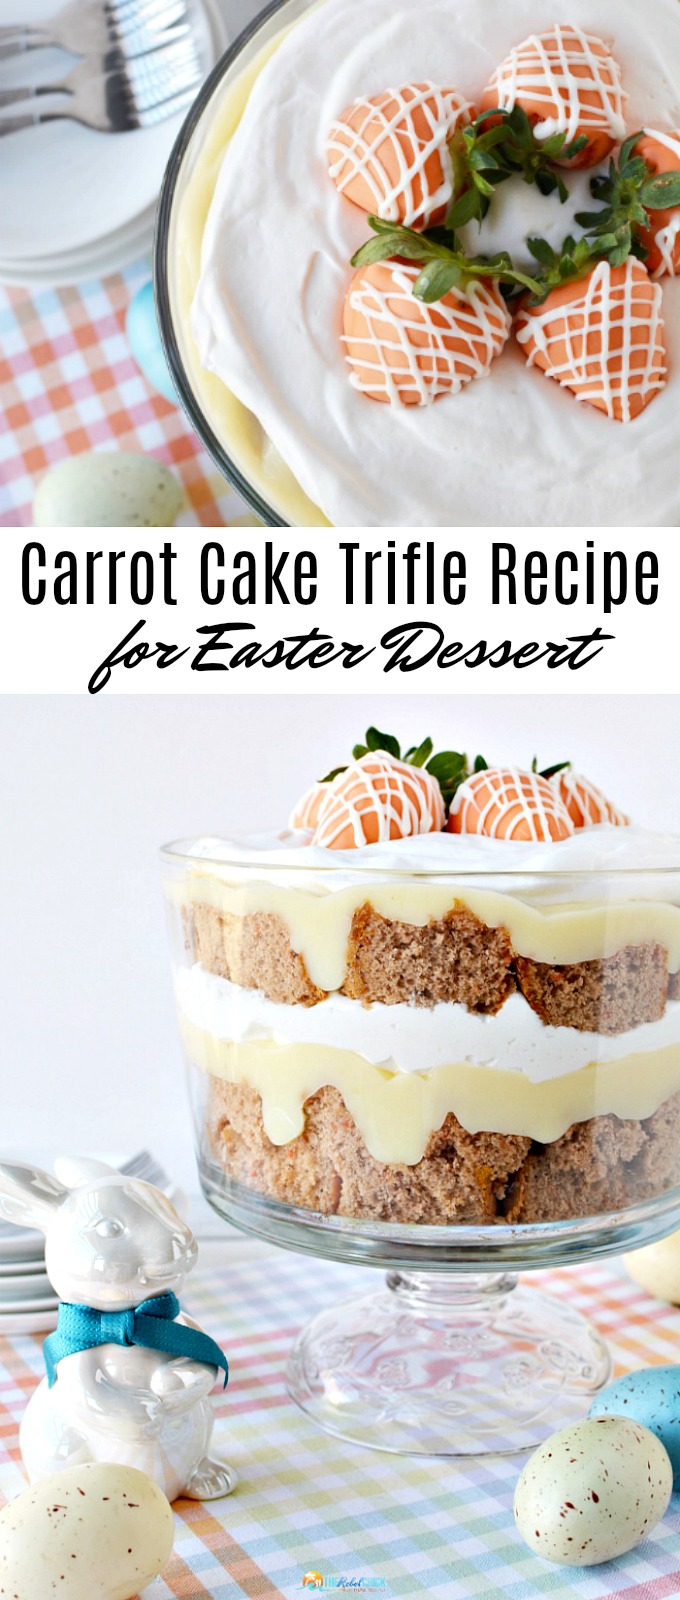 Carrot Cake Trifle Recipe for Easter Dessert during Quarantine